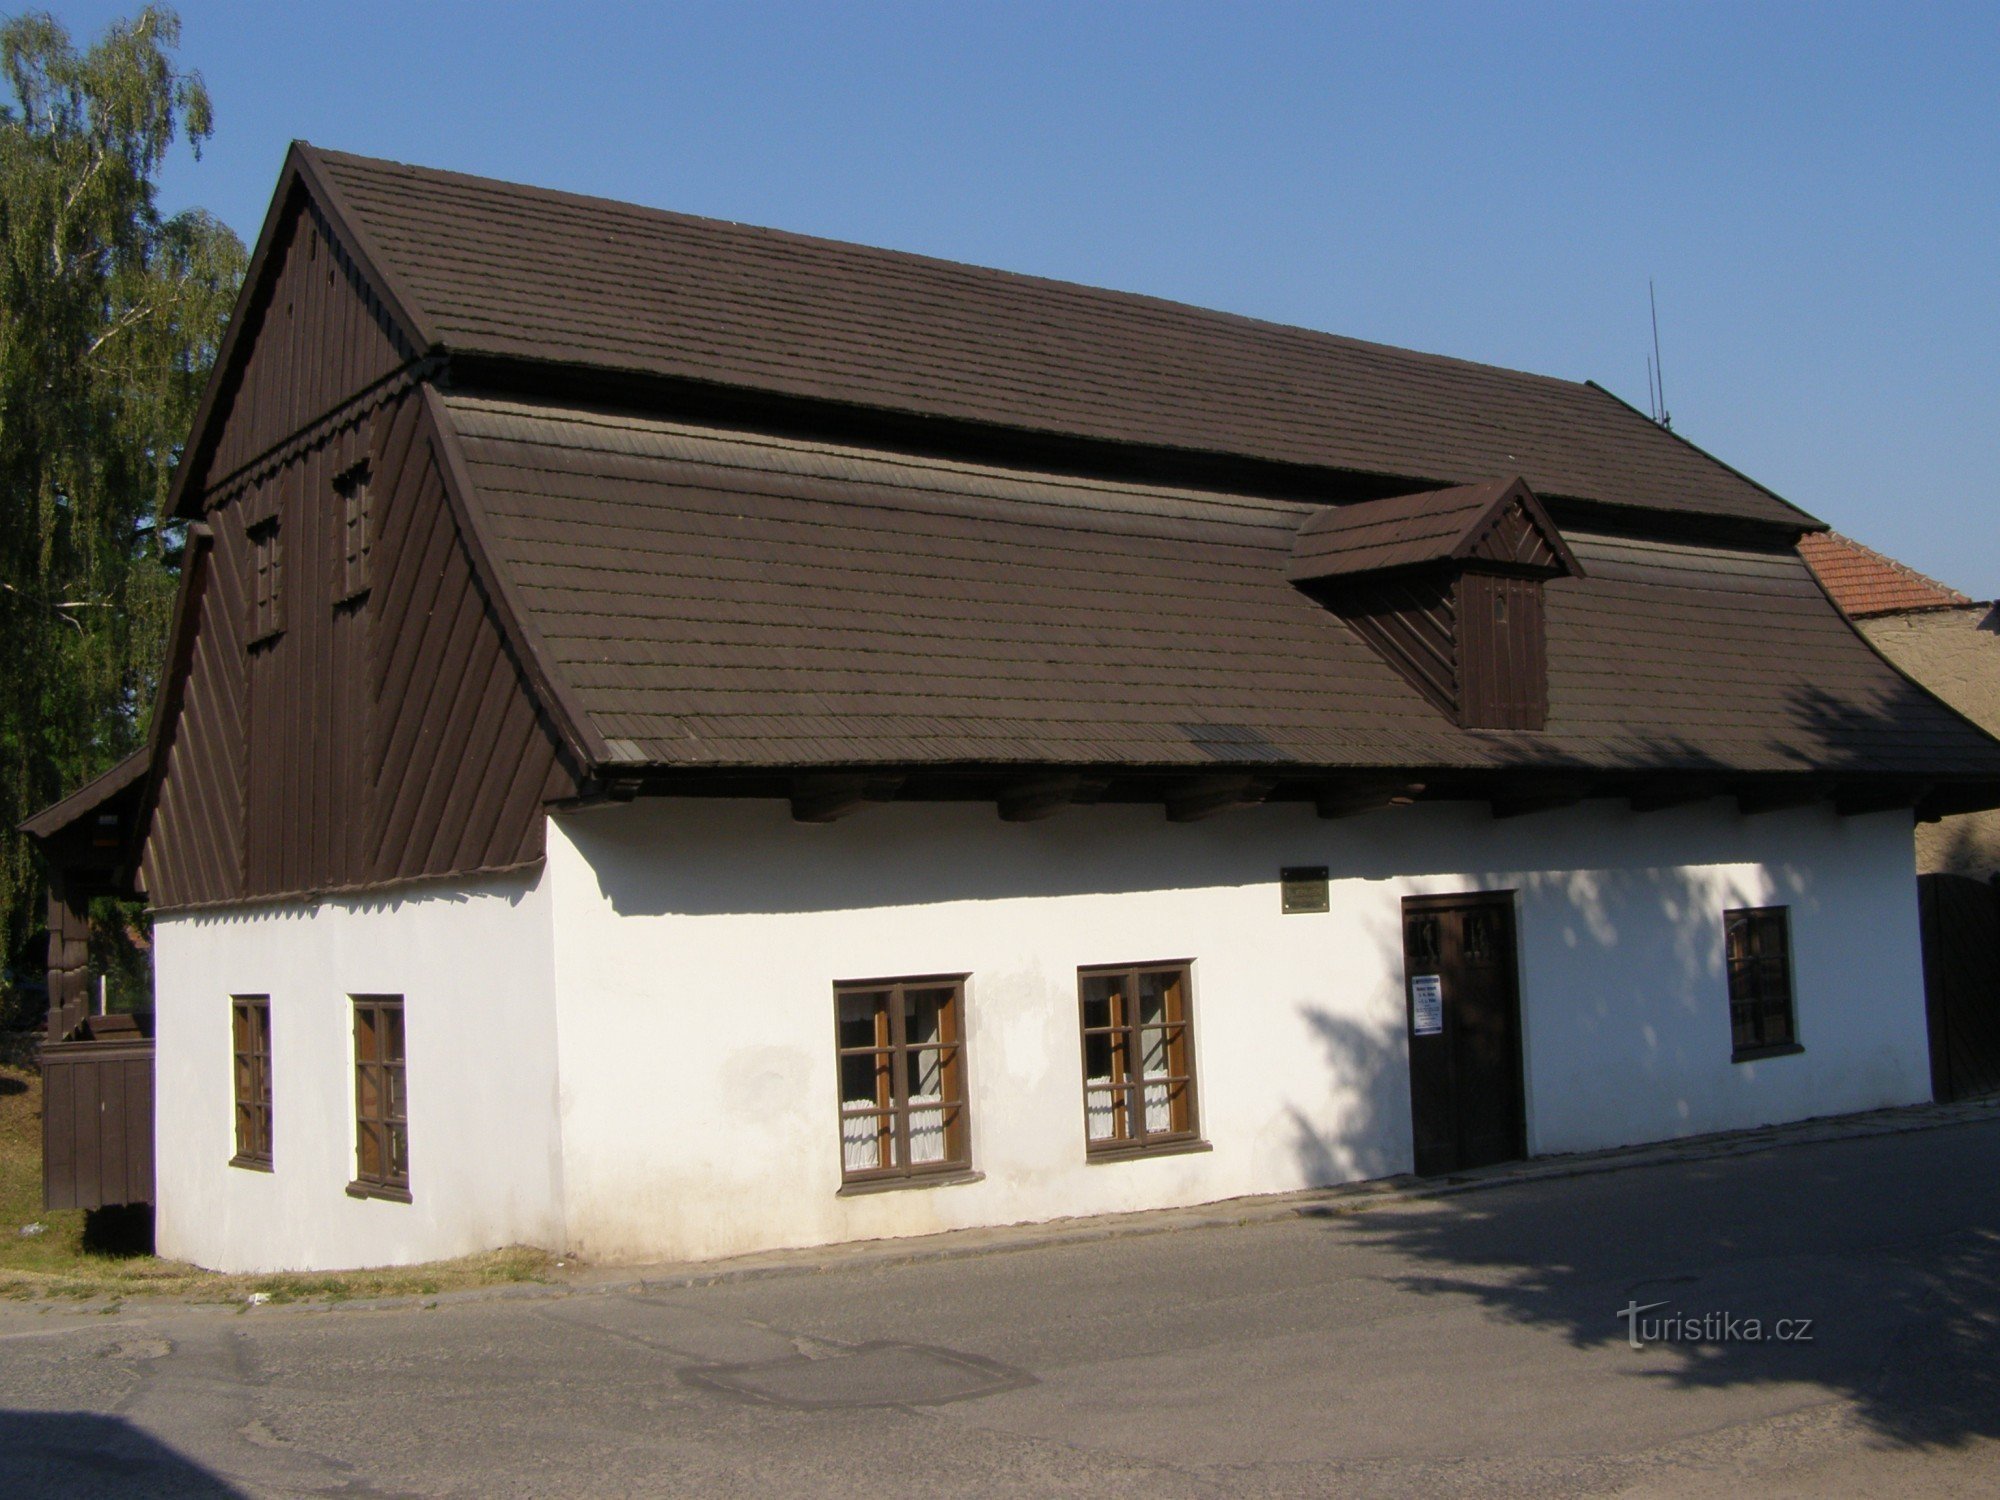 Dobruška - fødestedet for FLVěk (Heka)